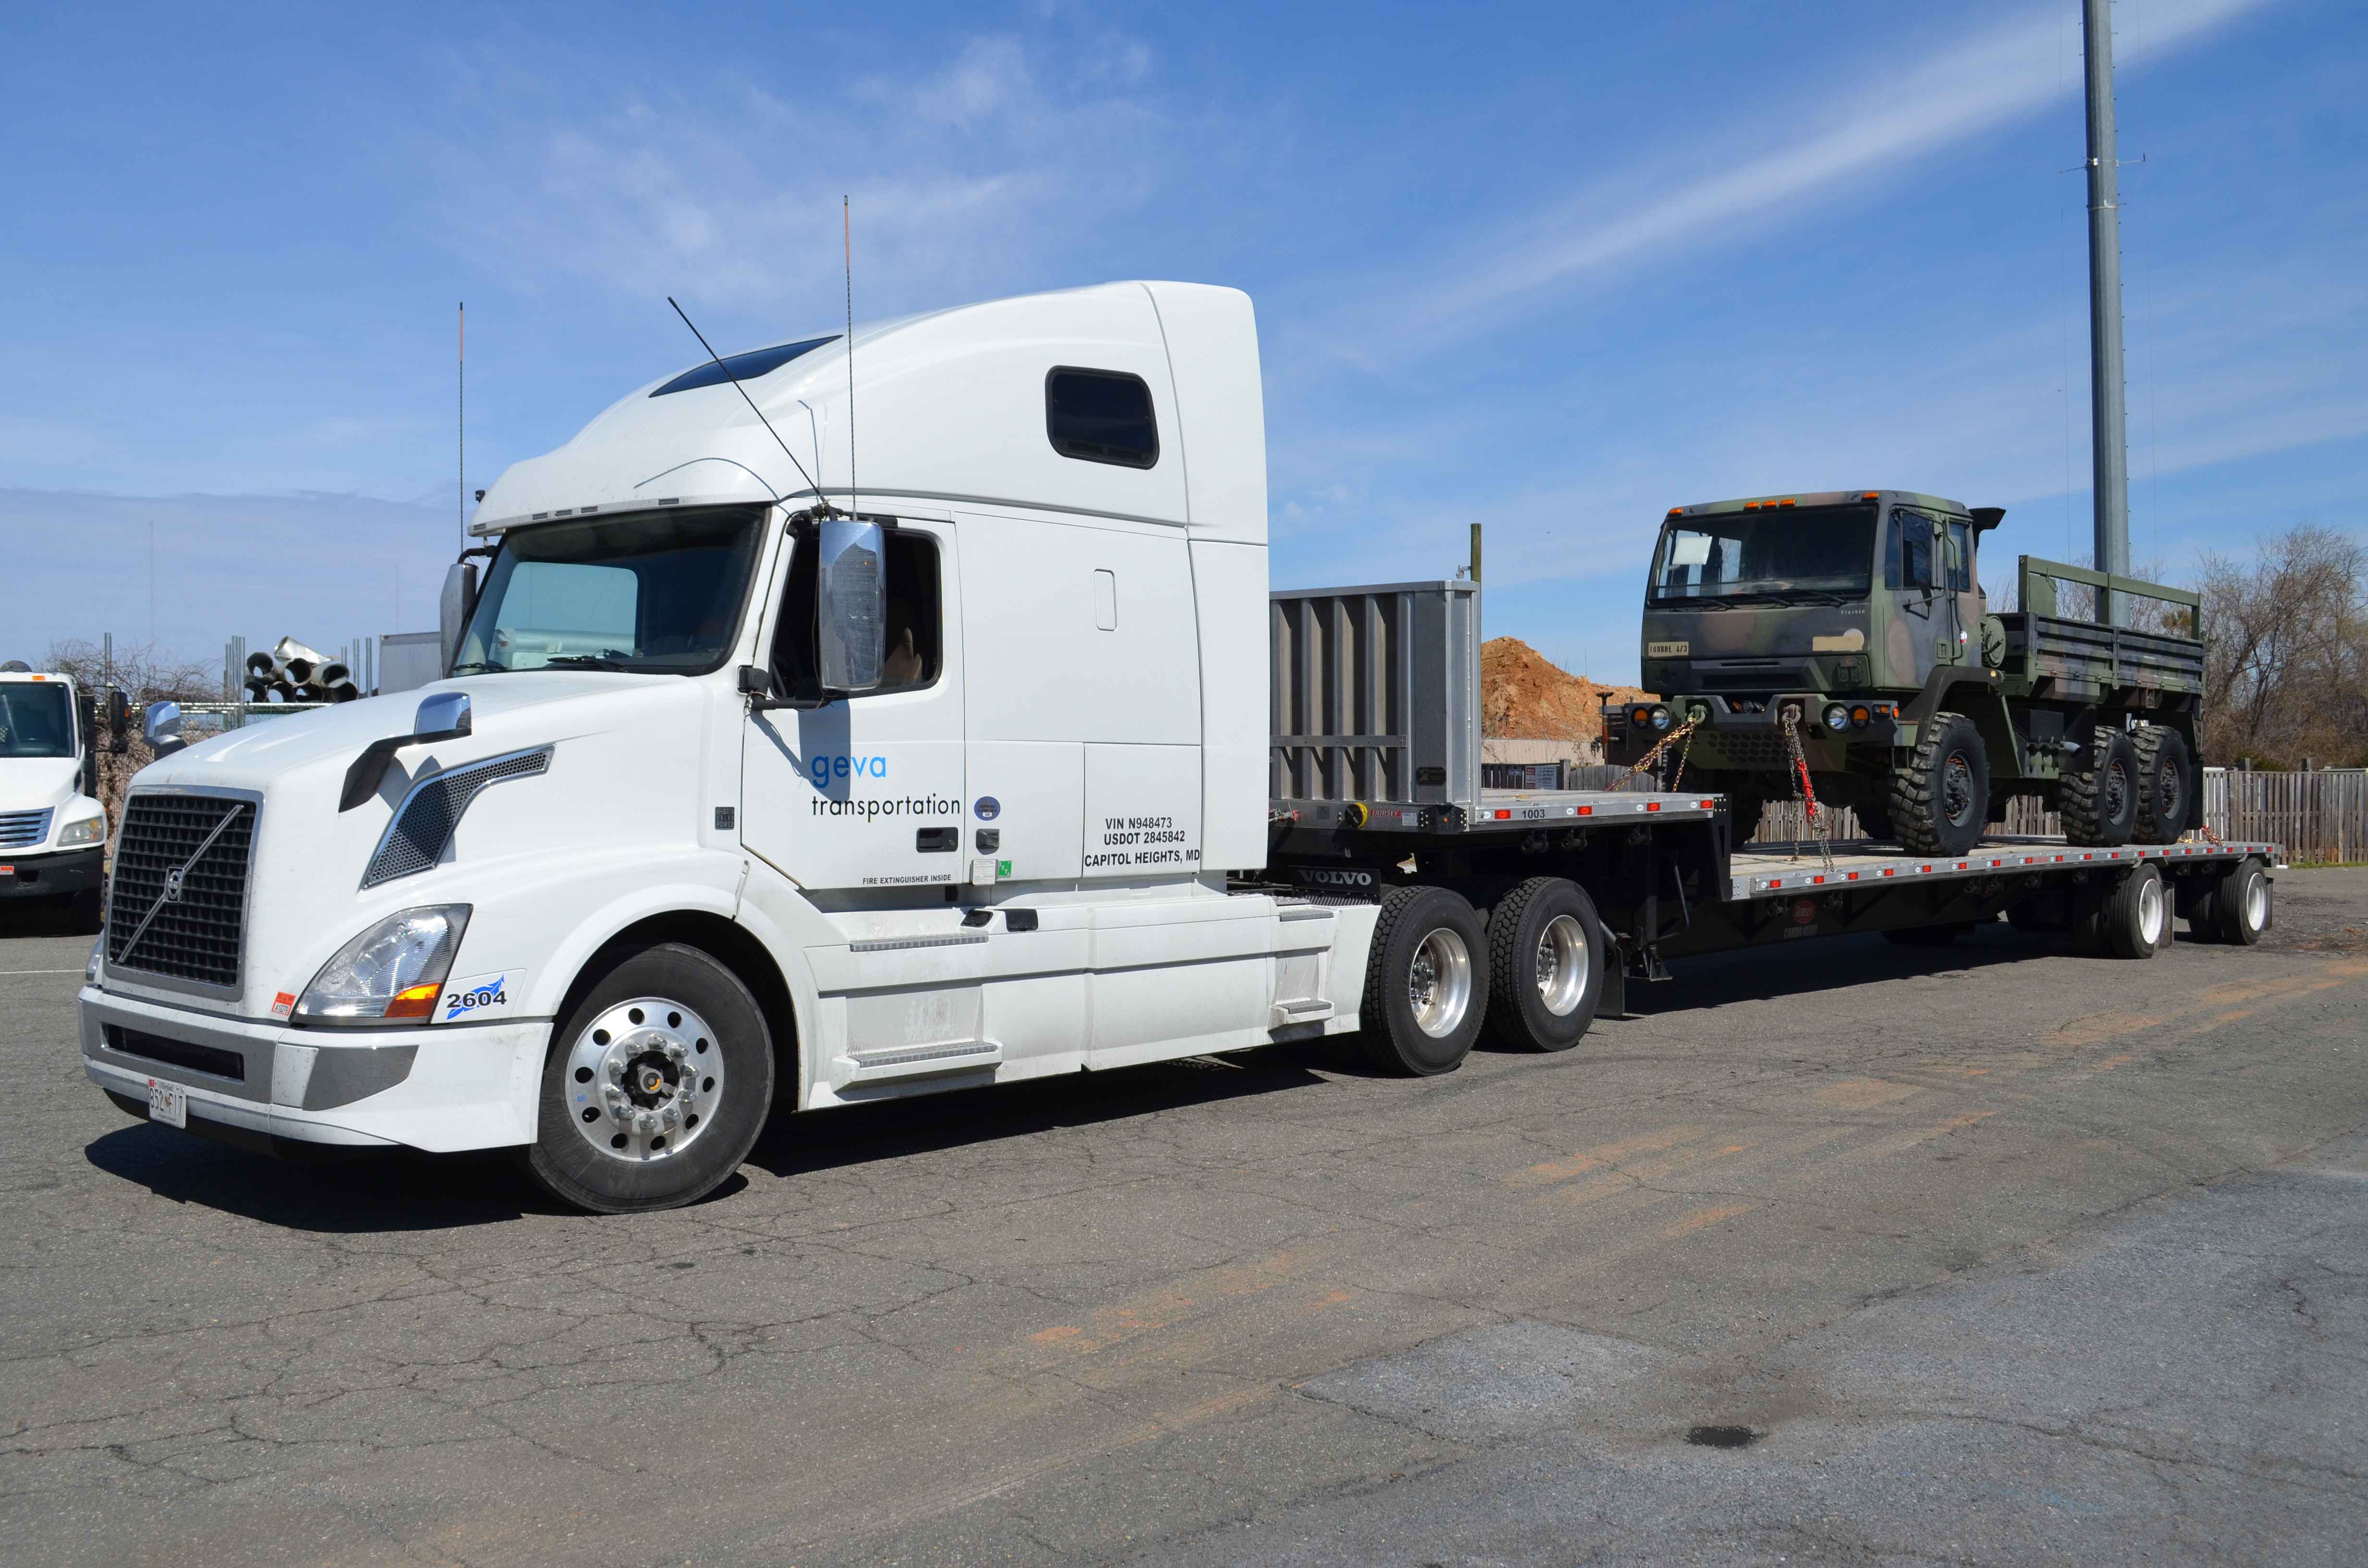 Geva truck transporting military vehicle